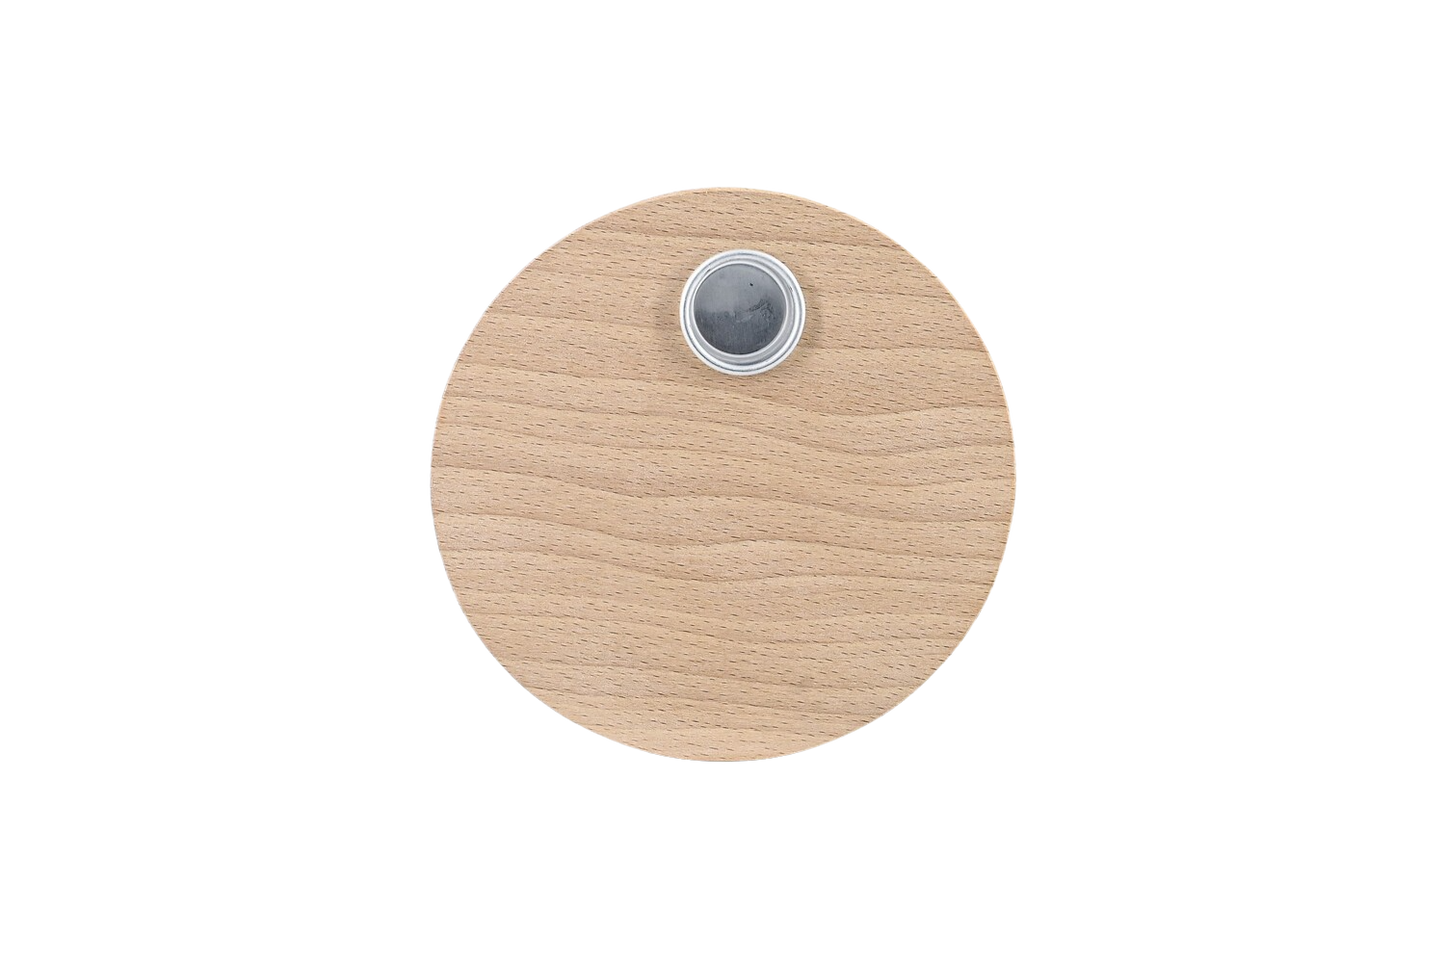 Tablero de cumpleaños de madera para grabar, paquete de 2, 20 cm de diámetro, (diferentes tipos de madera)